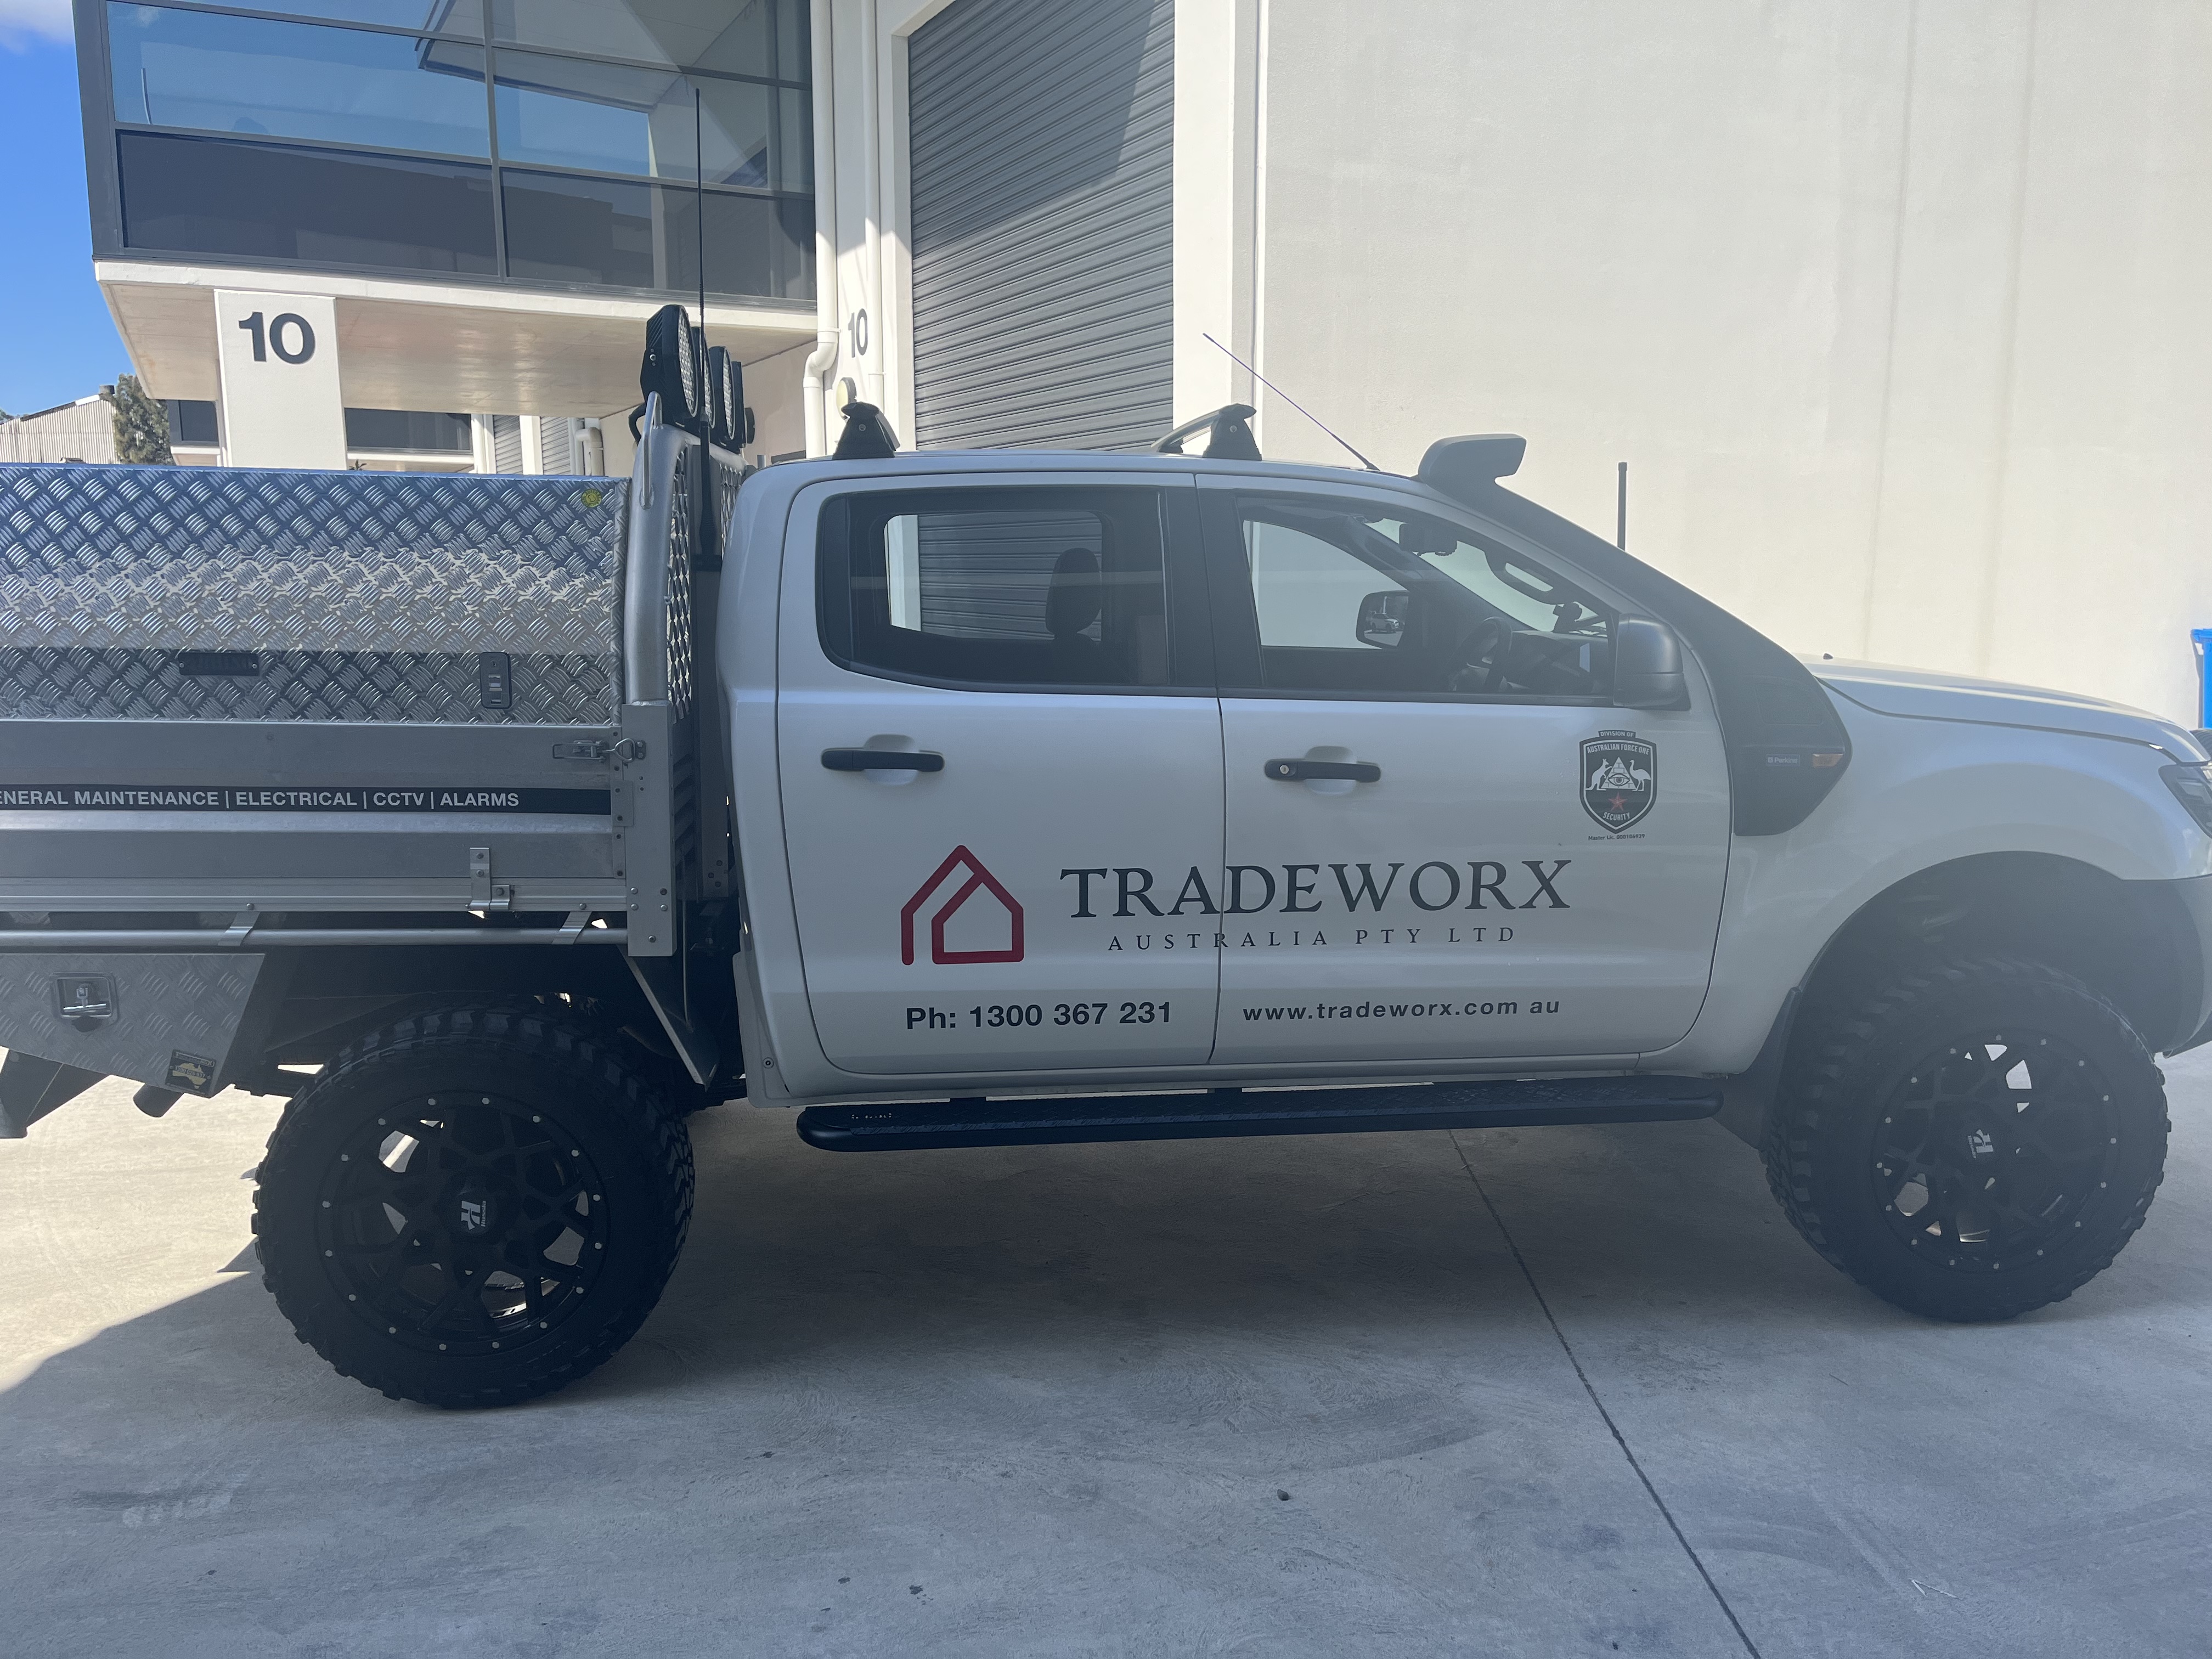 Tradeworx Australia Pty Ltd